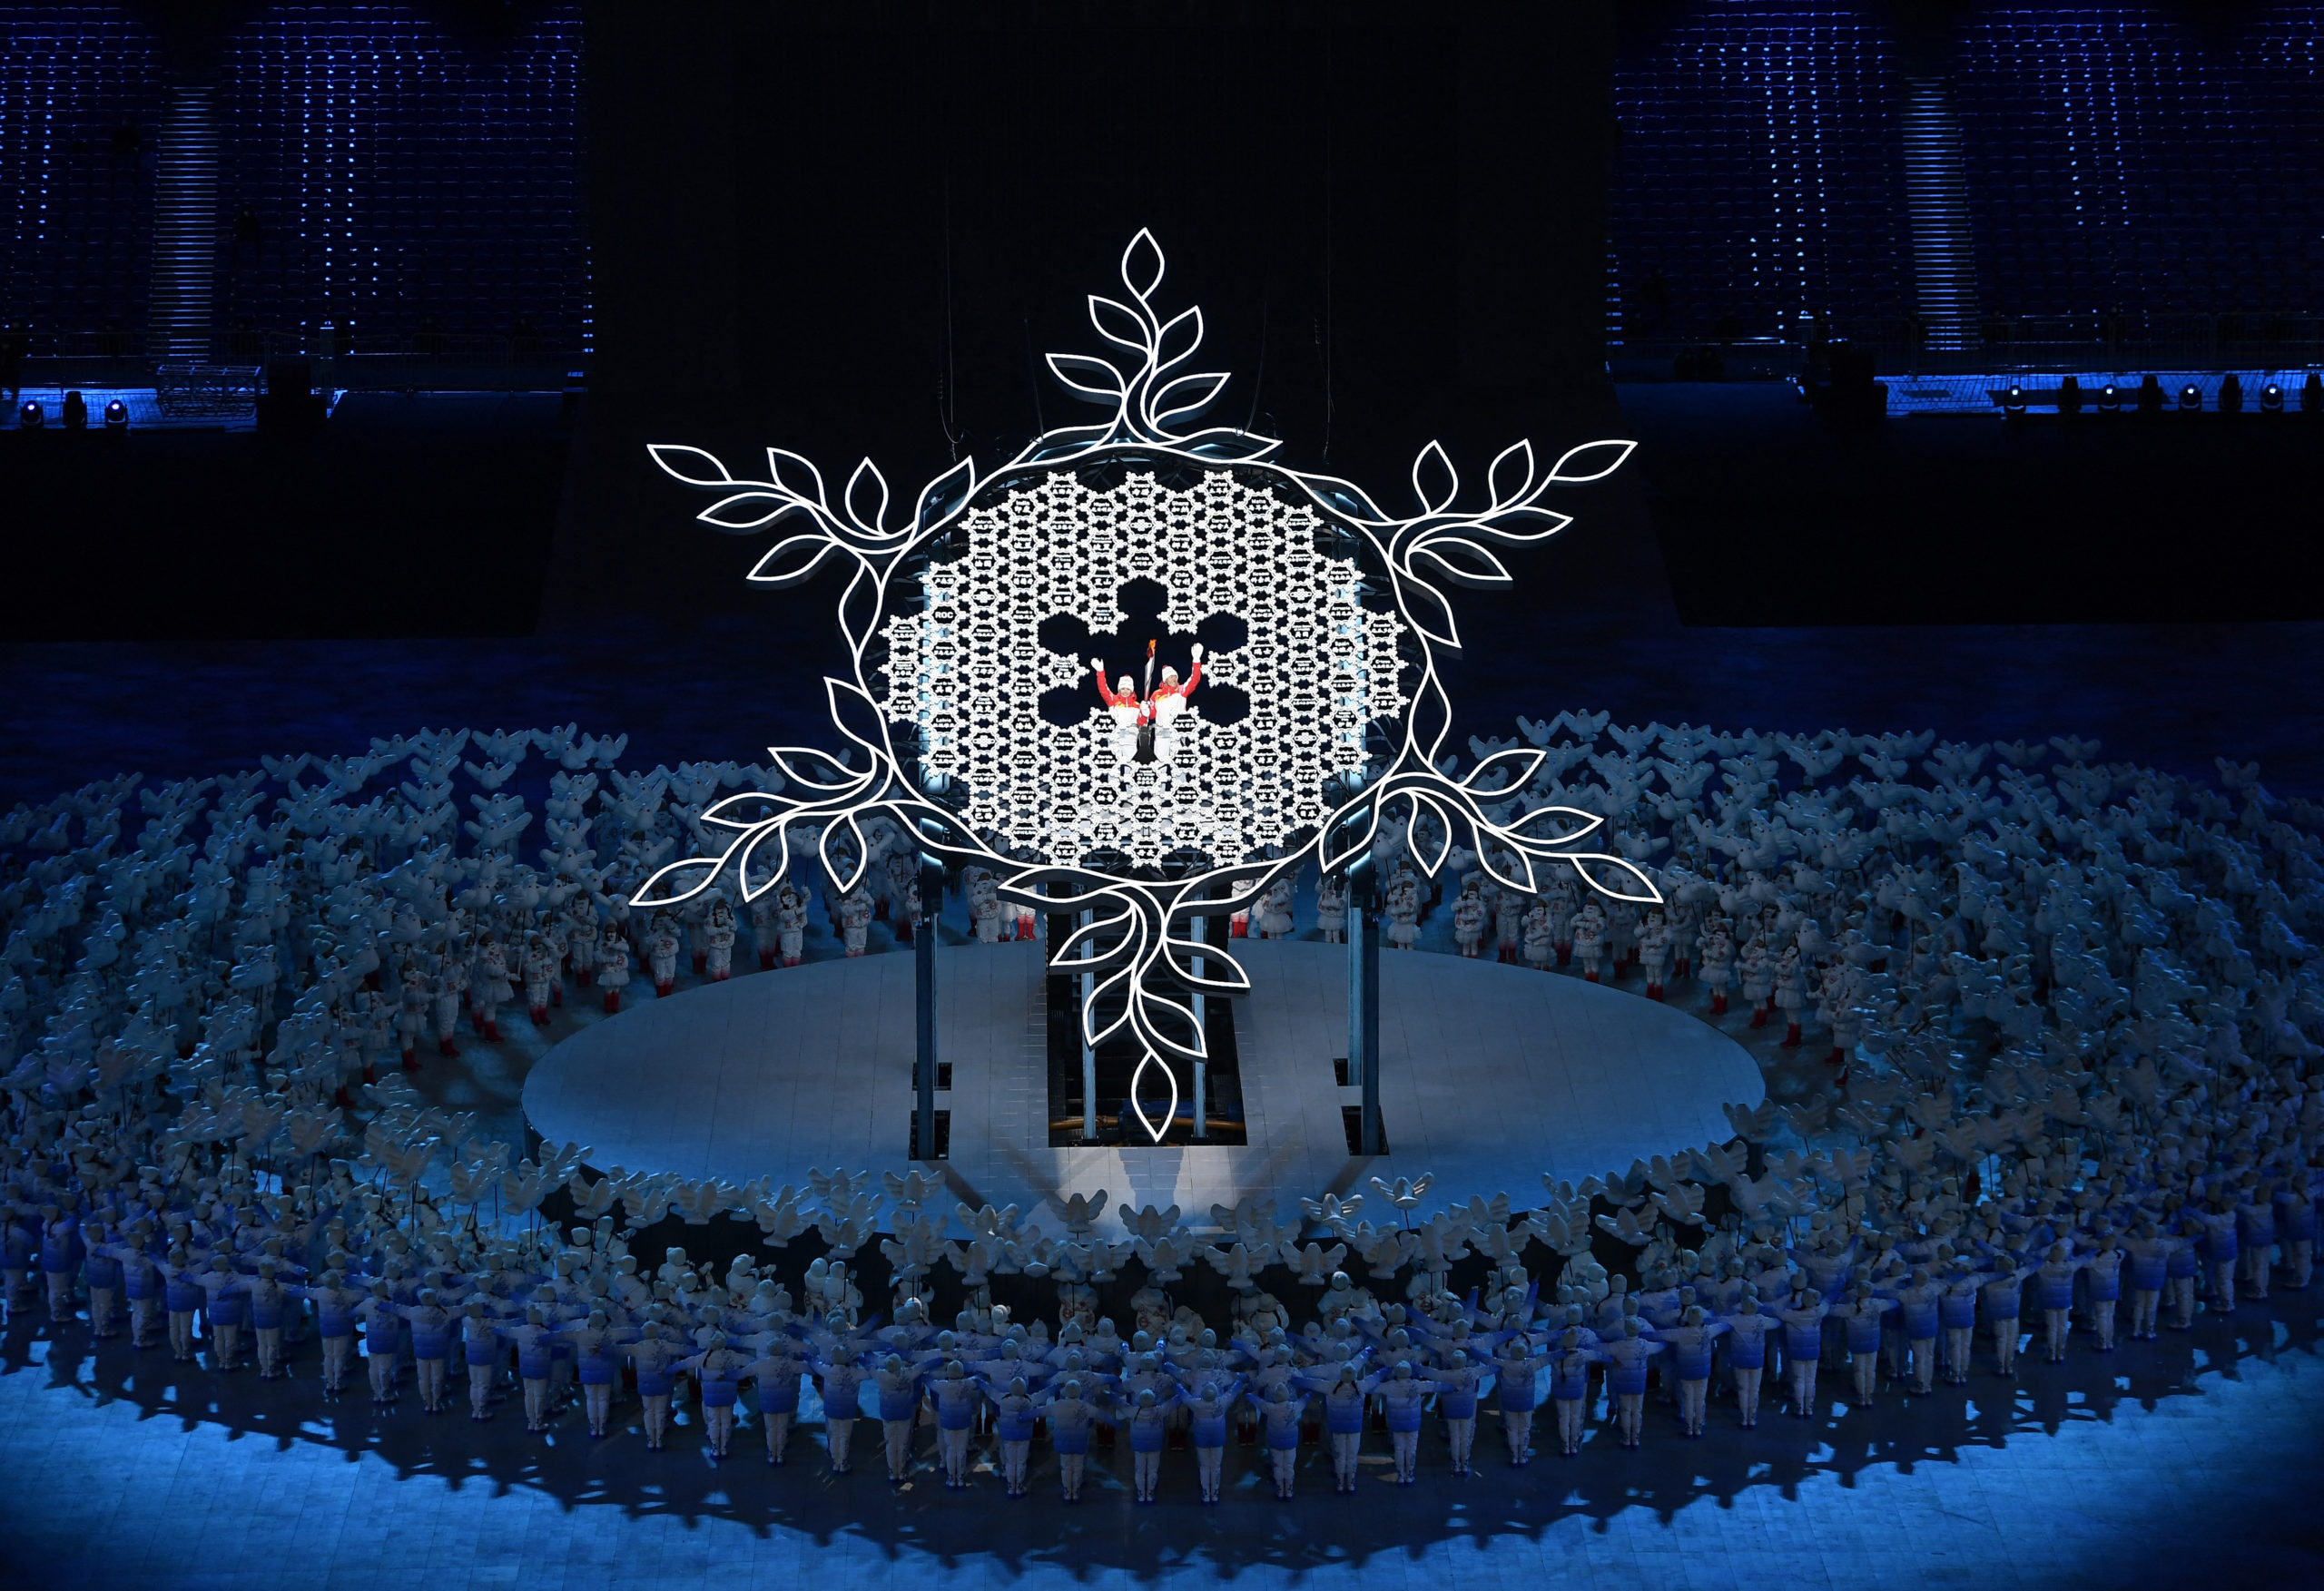 2022 Beijing Olympics - Opening Ceremony - National Stadium, Beijing, China - February 4, 2022. Torchbearers Zhao Jiawen and Dinigeer Yilamujiang hold the Olympic torch during the opening ceremony. 